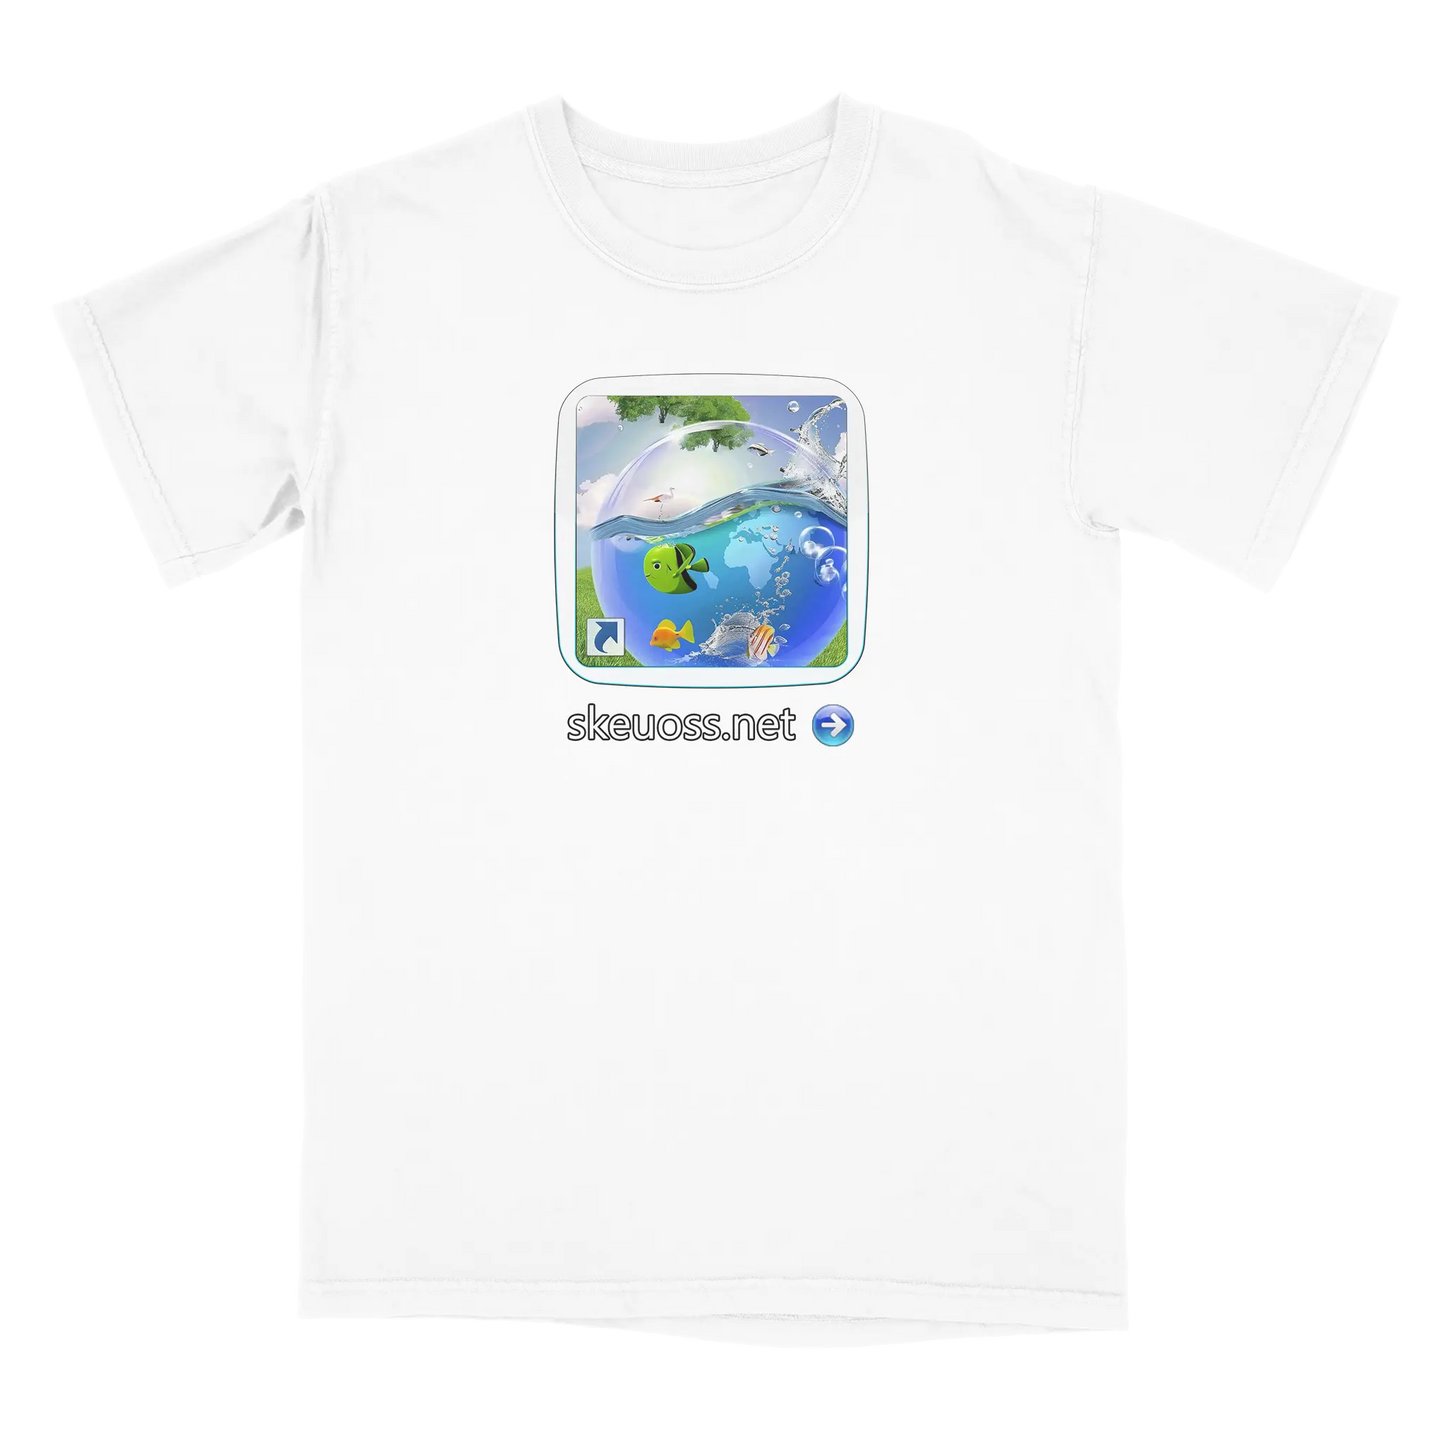 Frutiger Aero T-shirt - User Login Collection - User 170